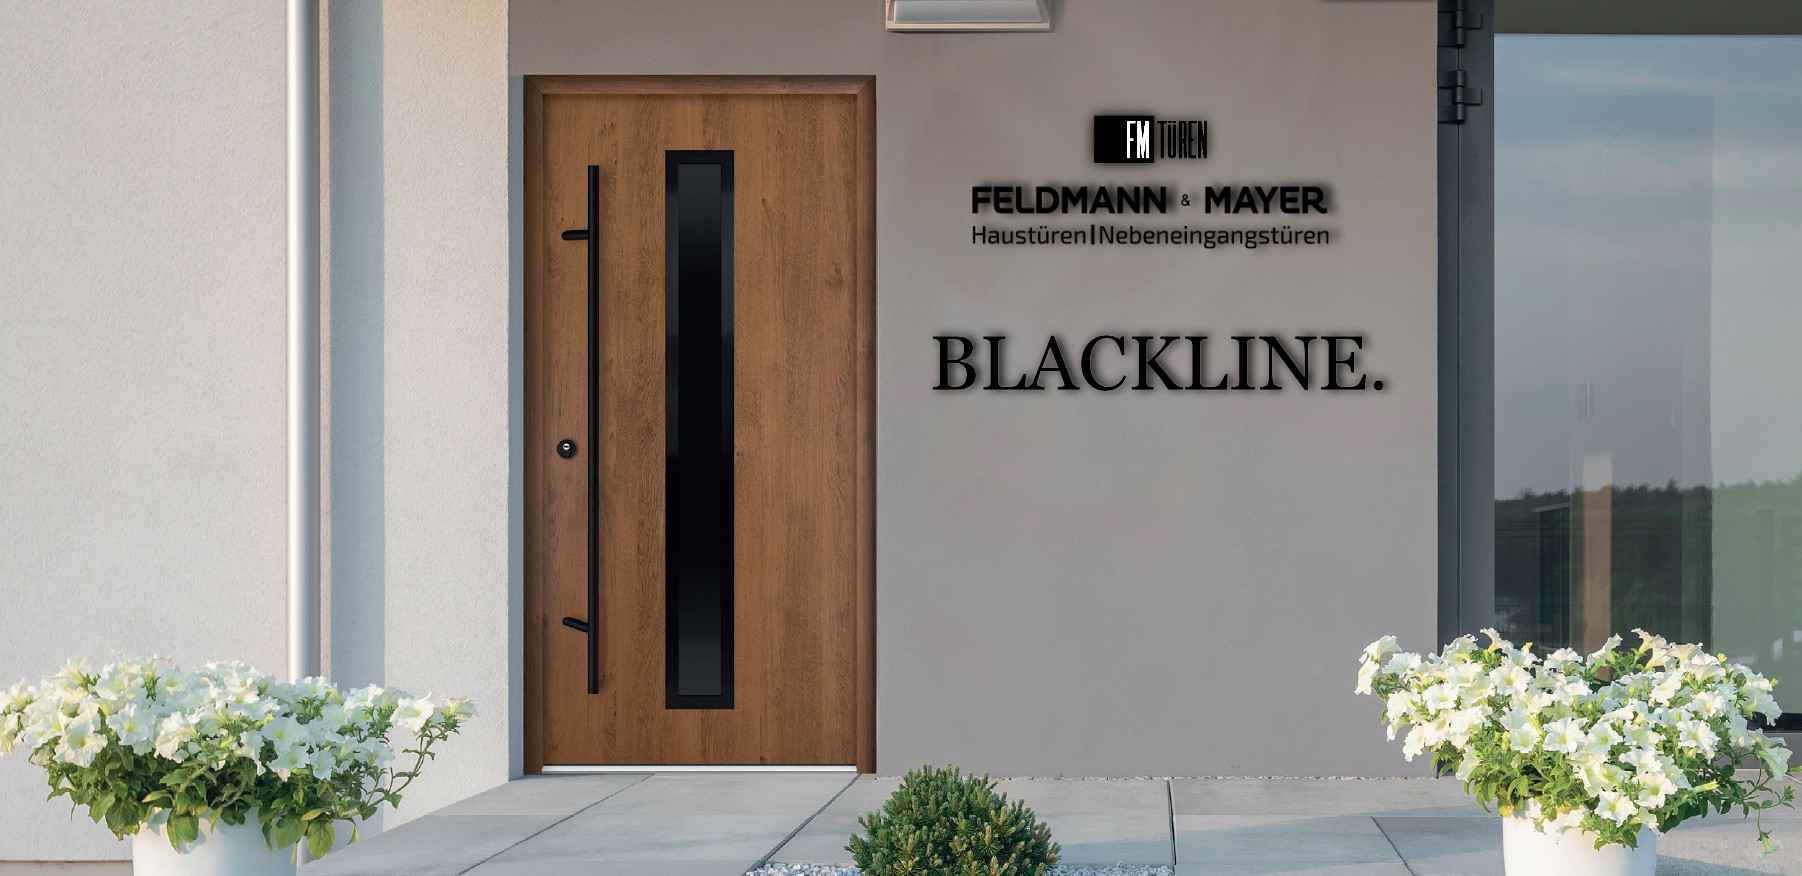 Feldmann & Mayer Blackline